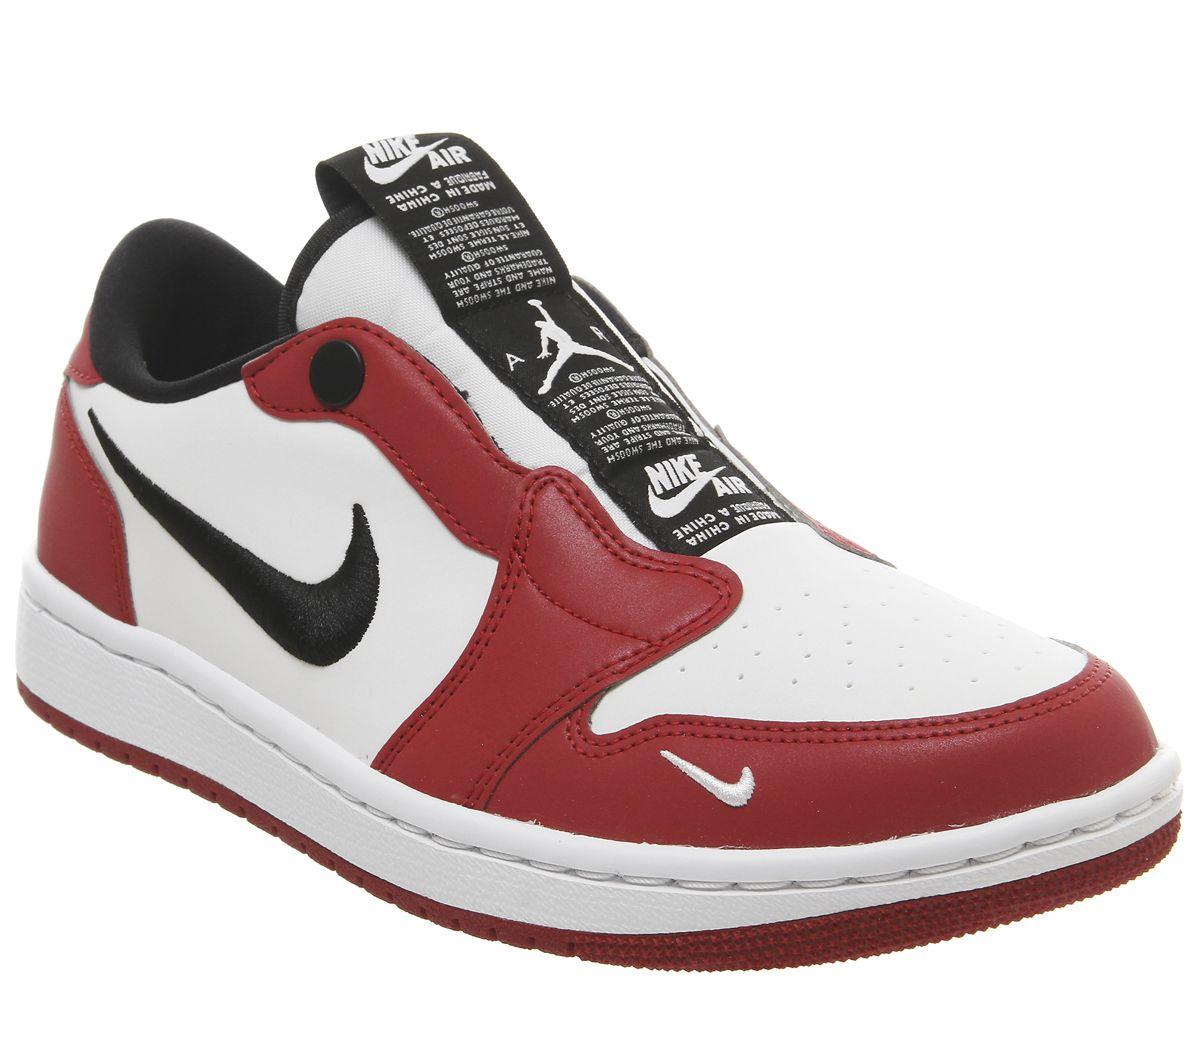 Lyst - Nike Air Jordan 1 Low Slip On Trainers in Red - Save 44%